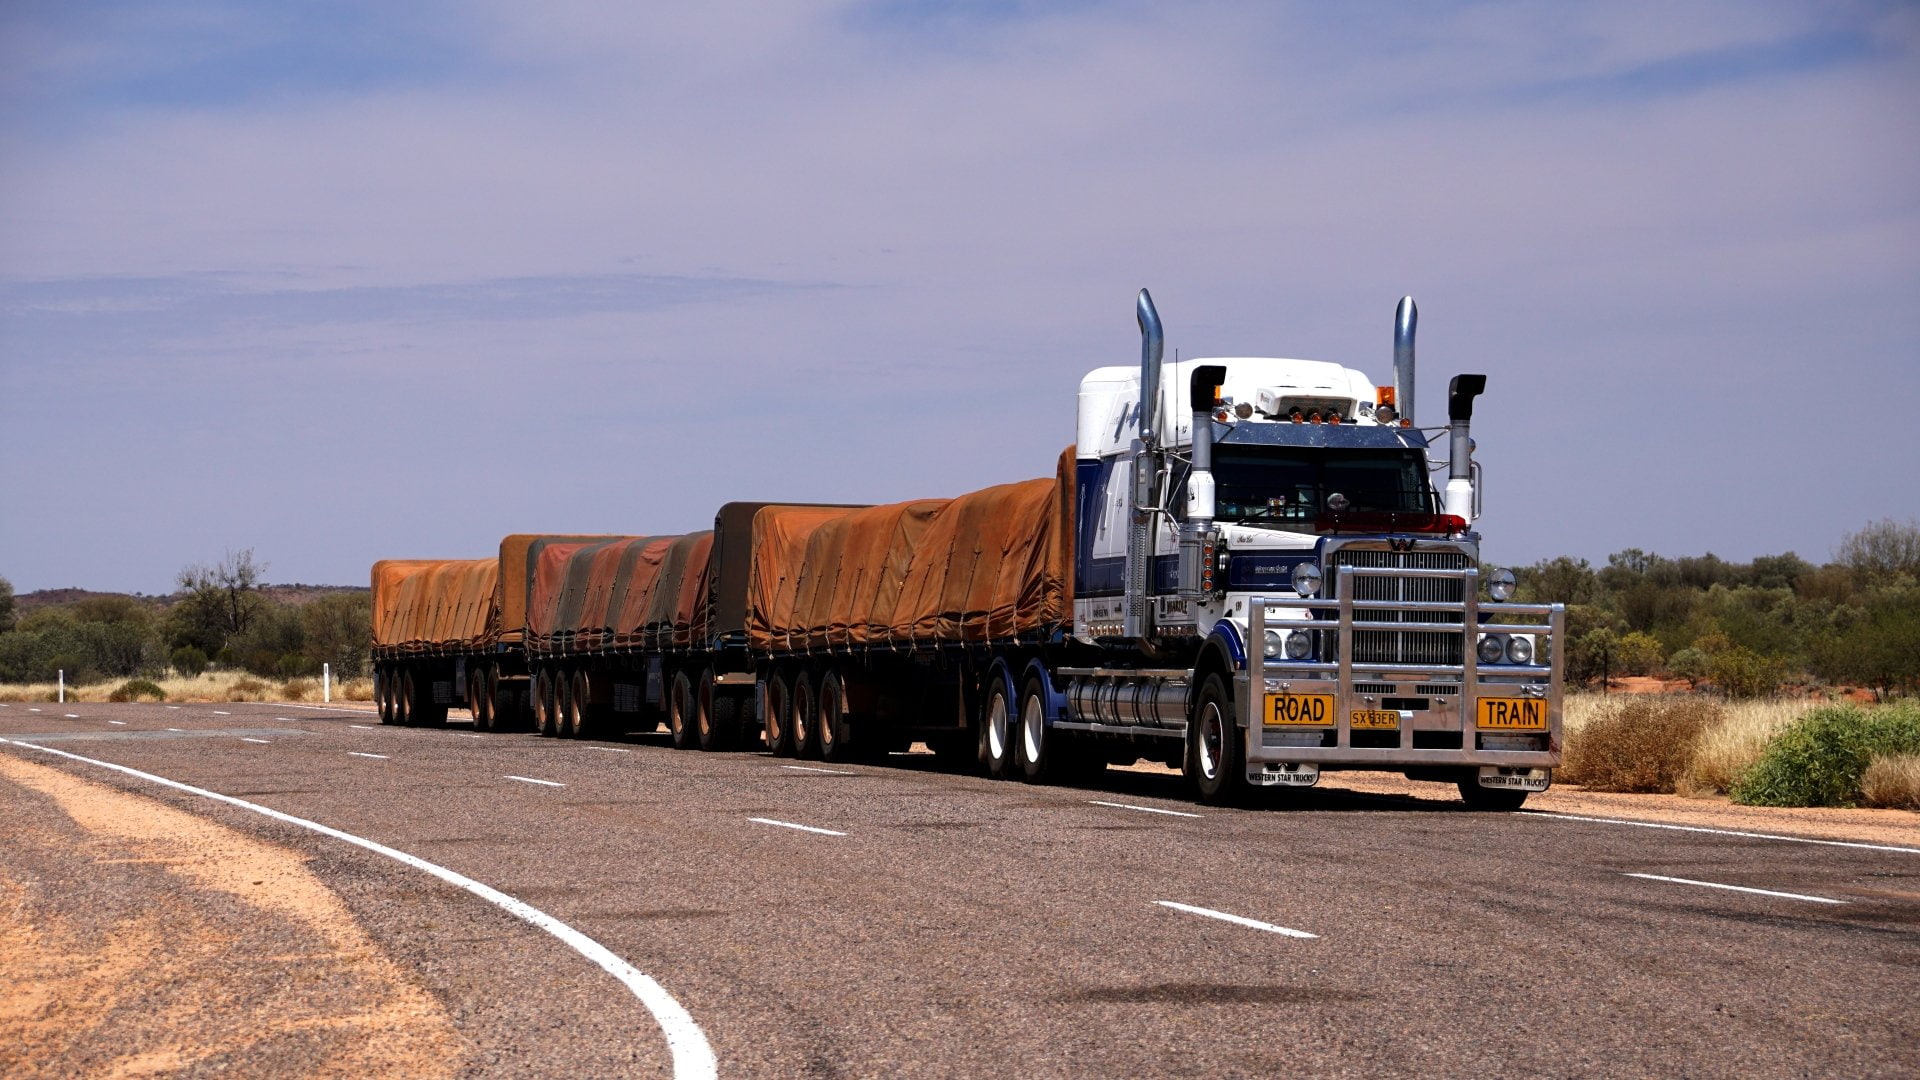 Vehicles, Western Star, Australia, Outback, Road, Road Train